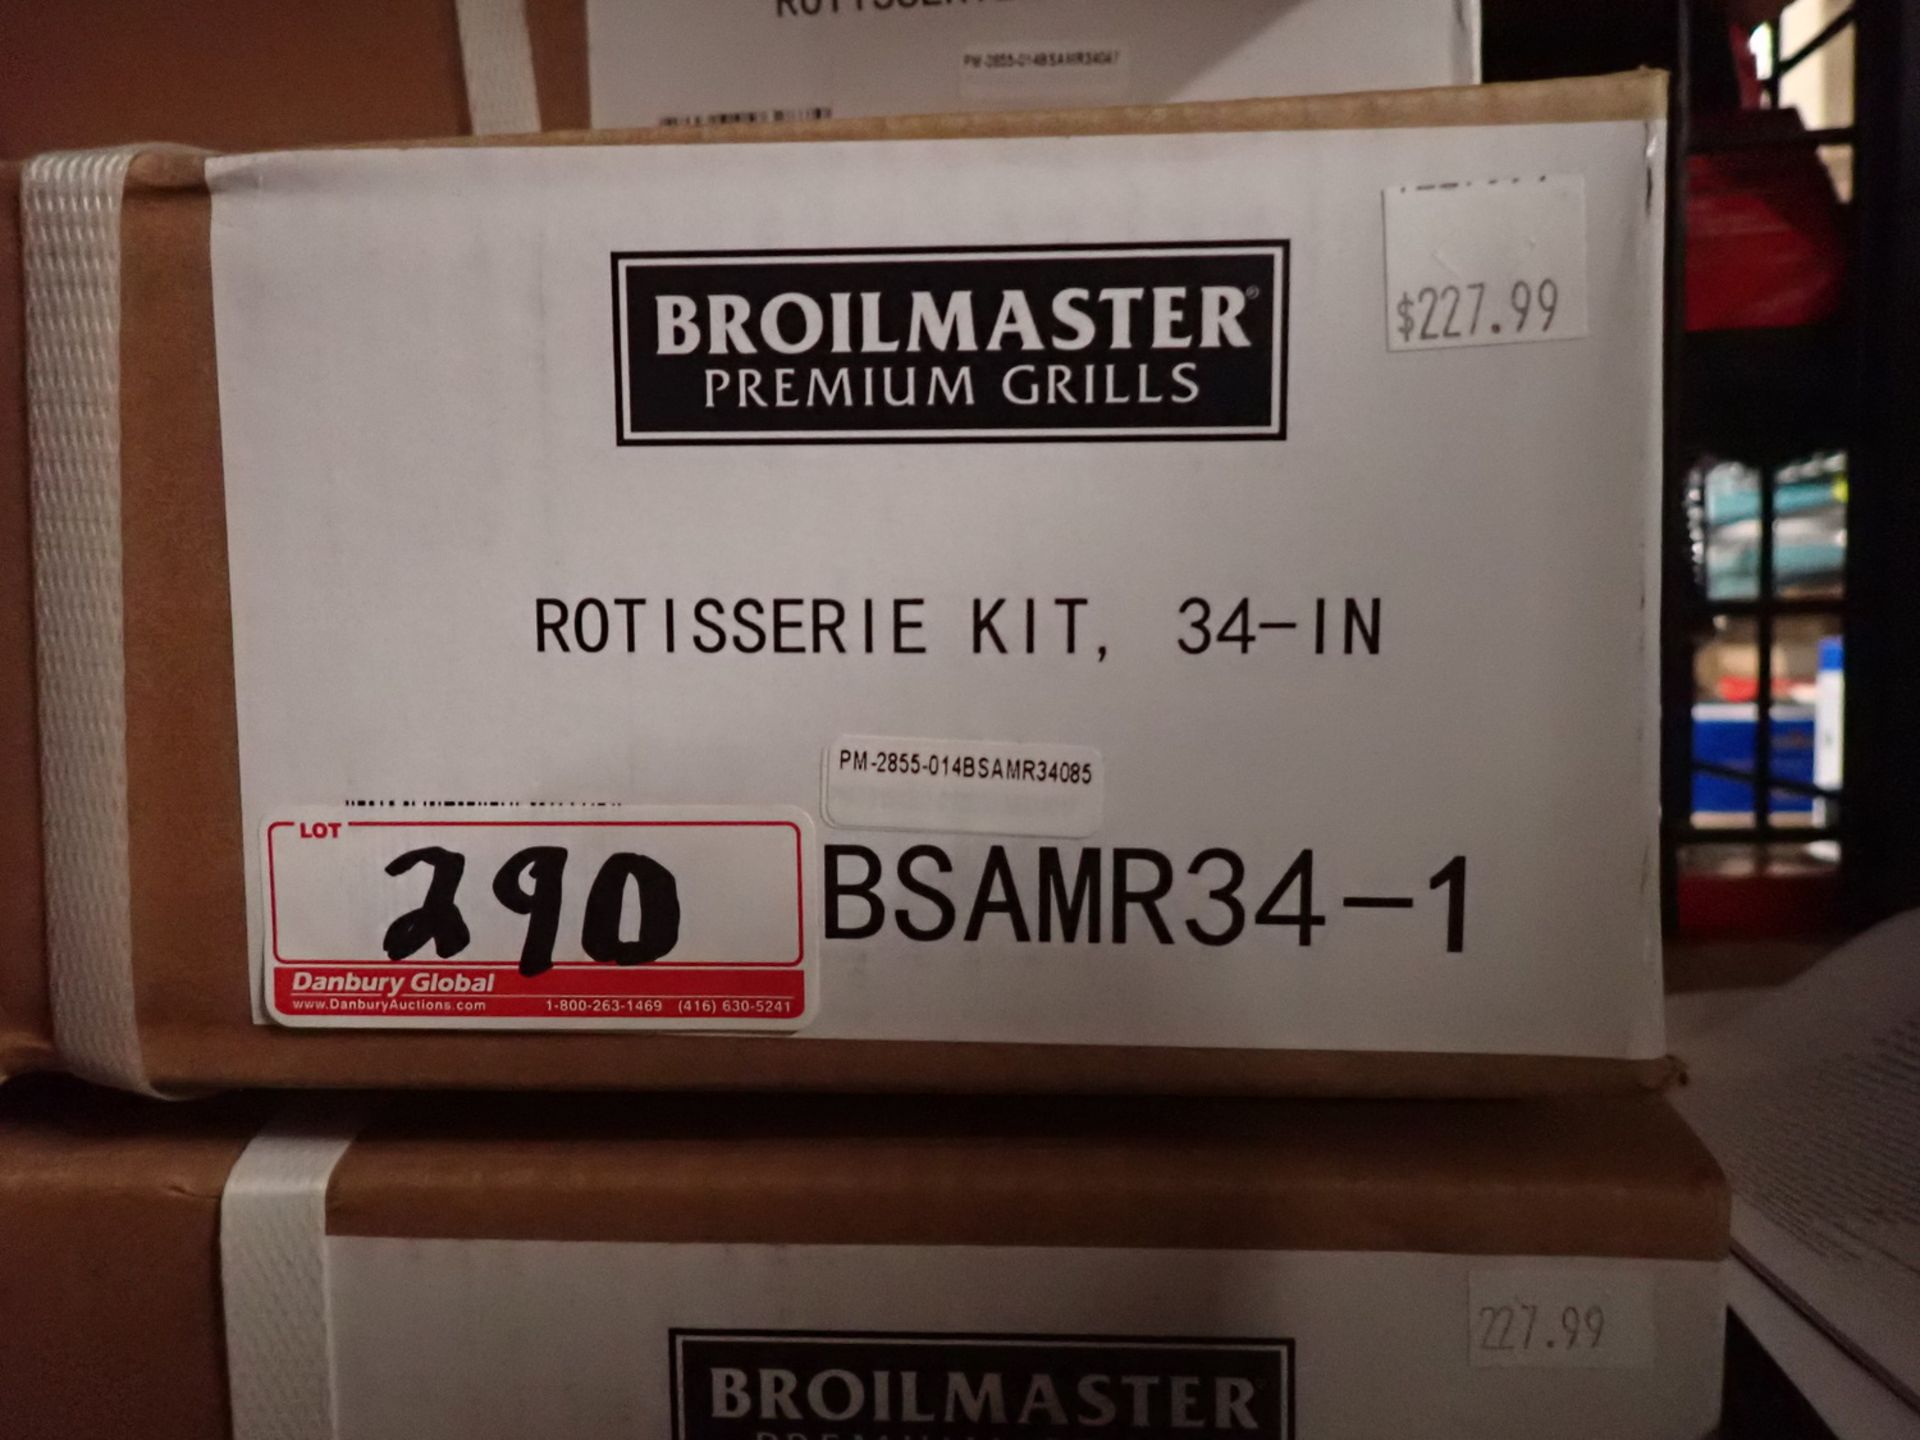 UNITS - BROILMASTER ROTISSERIE KIT 34" (RETAIL $227.99 EA)